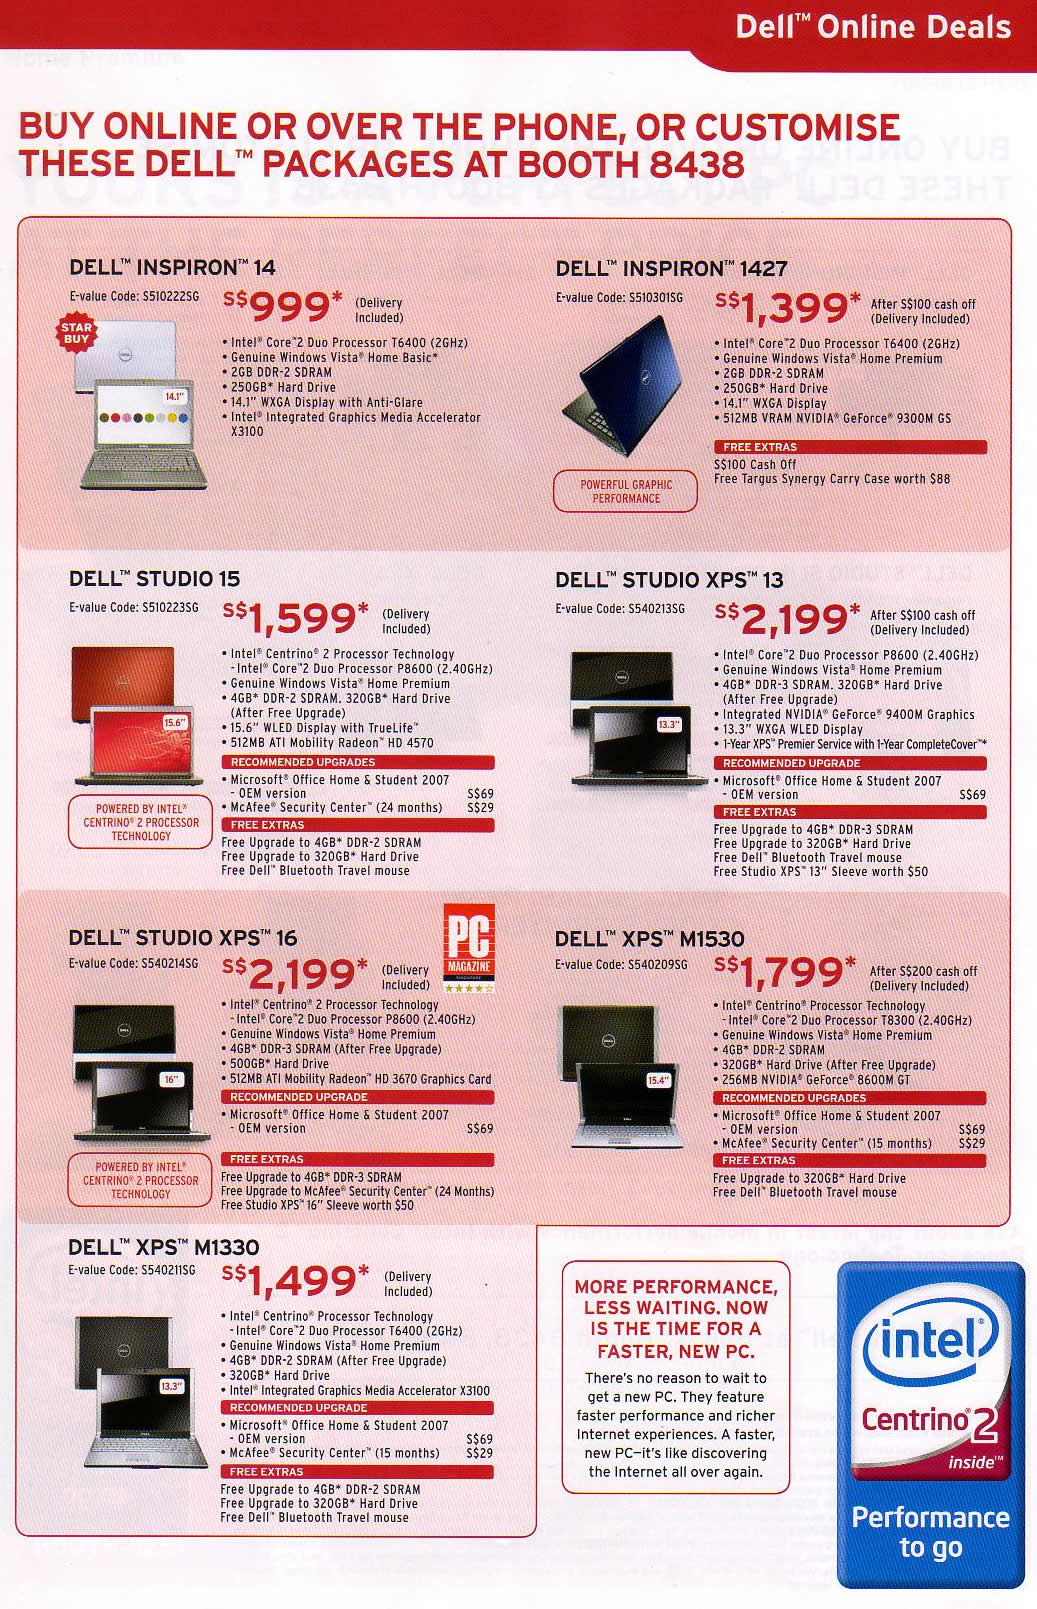 IT Show 2009 price list image brochure of Dell Inspiron Studio Xps 2 (coldfreeze)